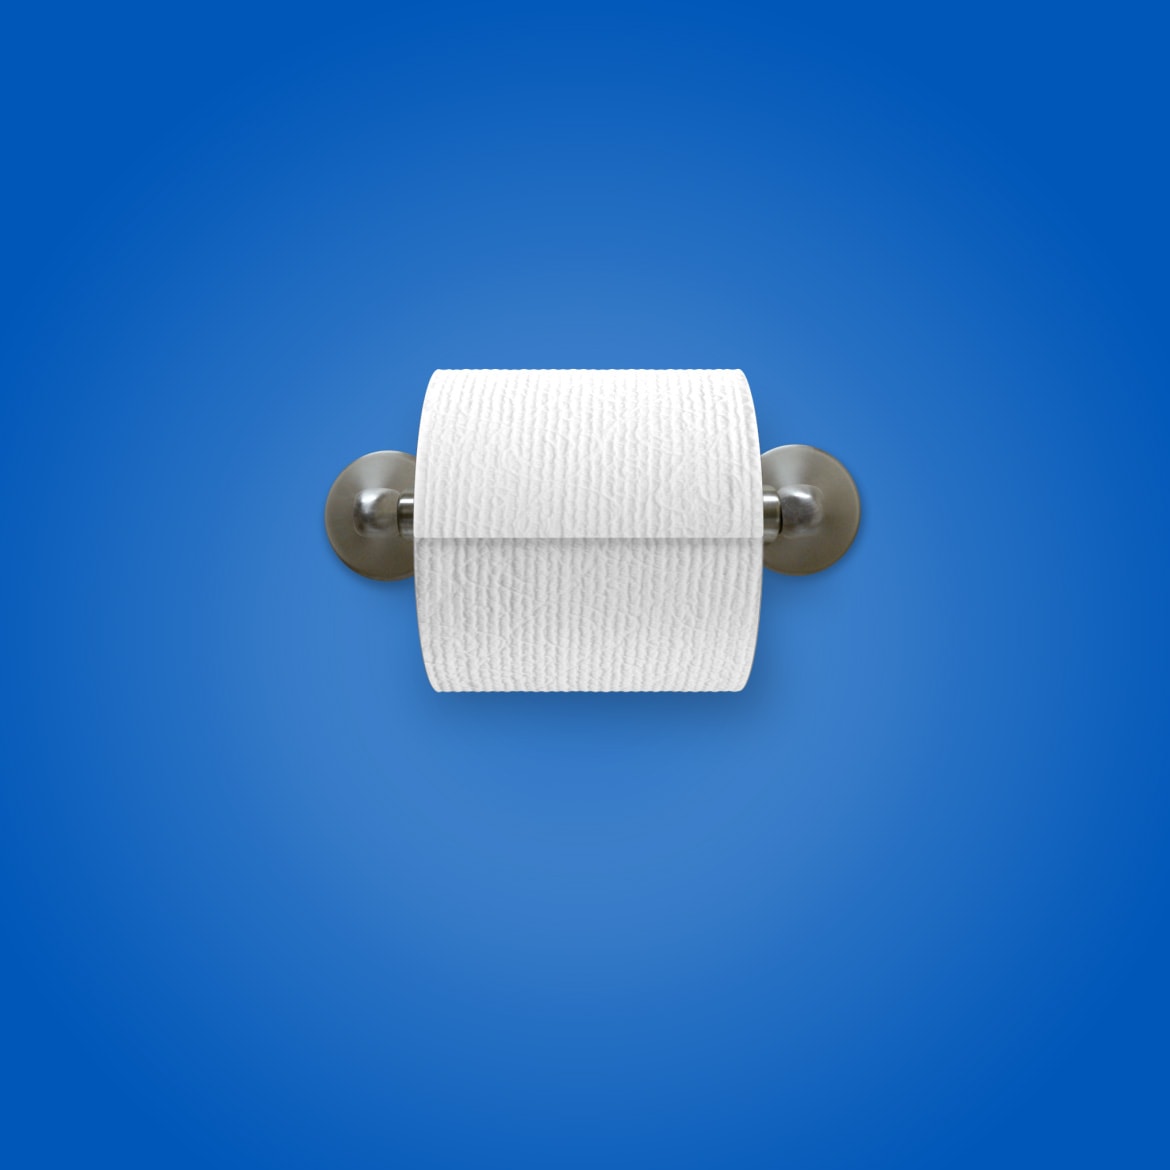 Roll of Scott® toilet paper mounted on holder